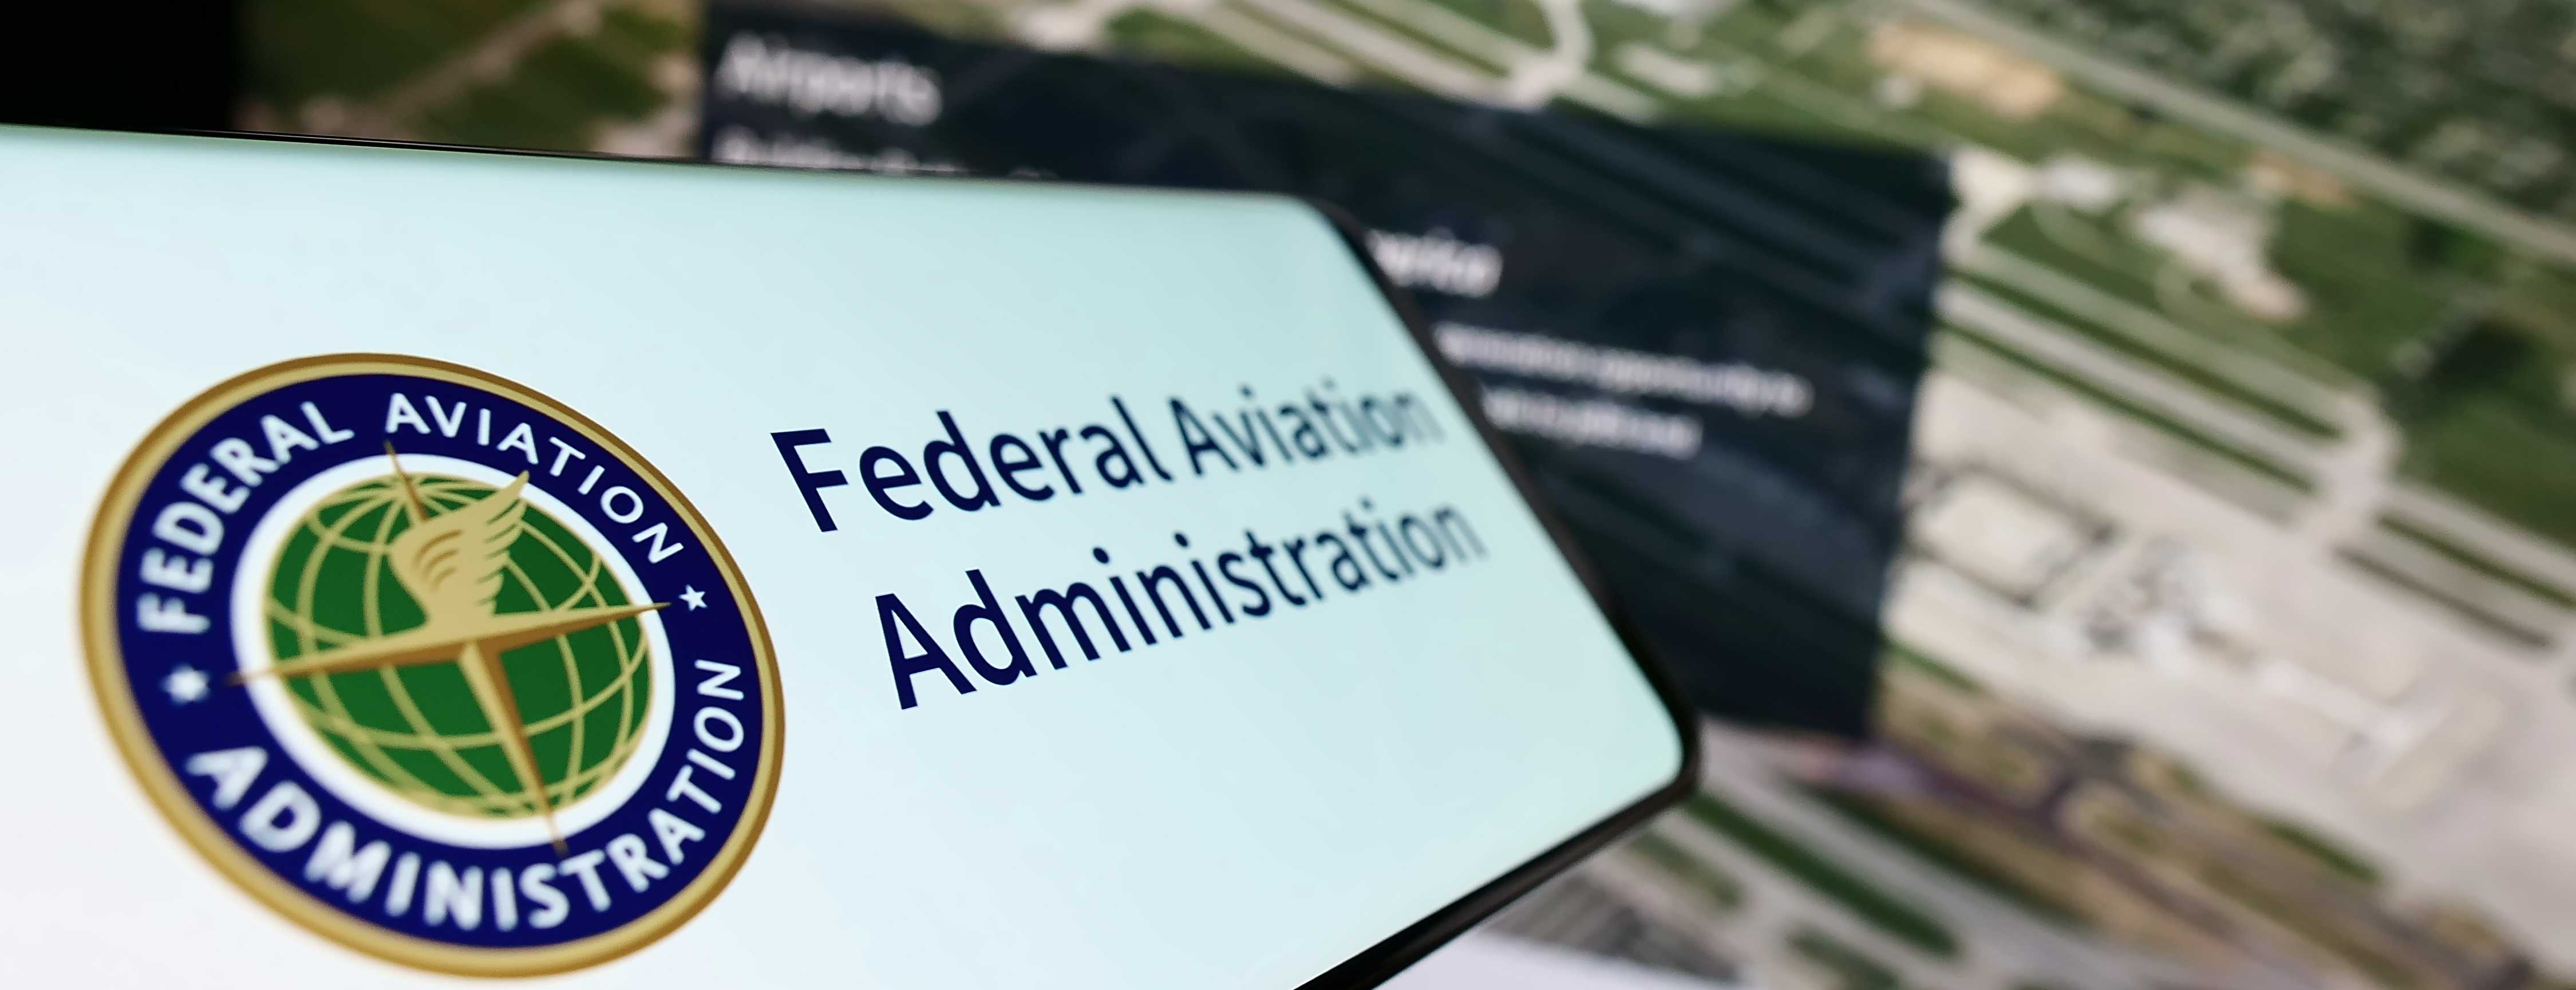 Logo of Federal Aviation Administration 